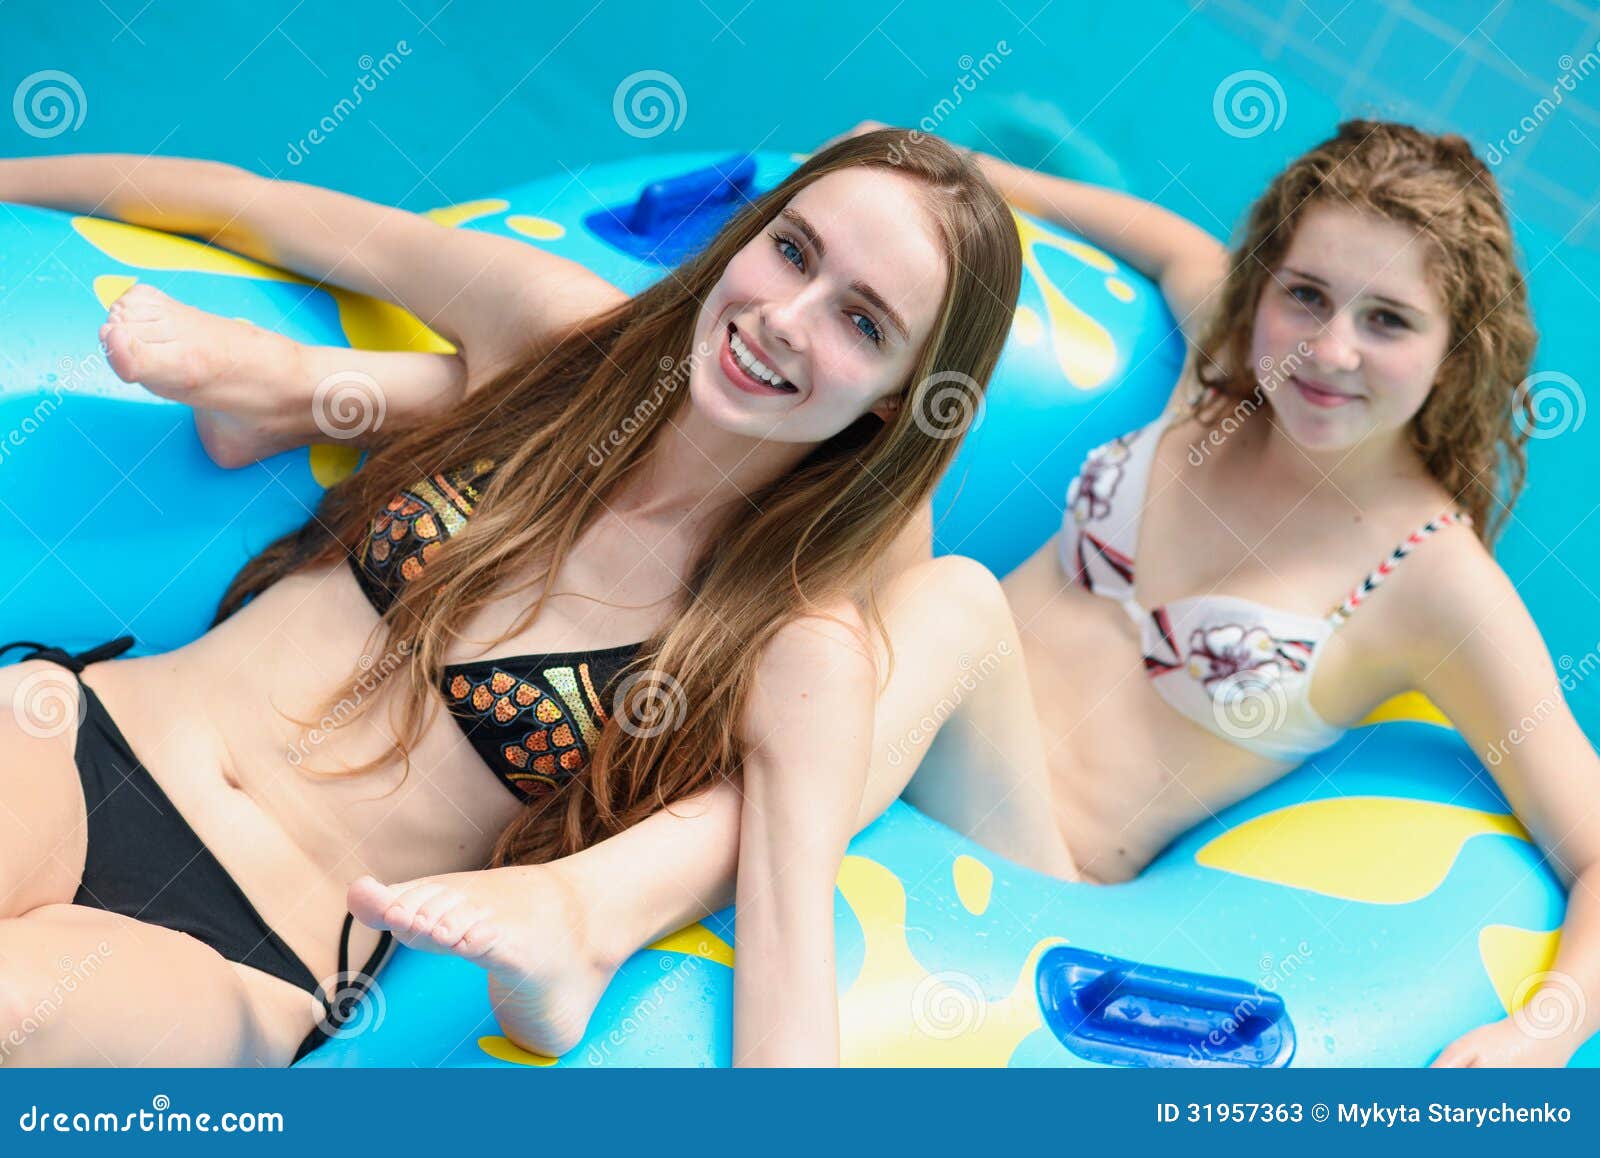 chase corbitt recommends bikini vs water slide pic